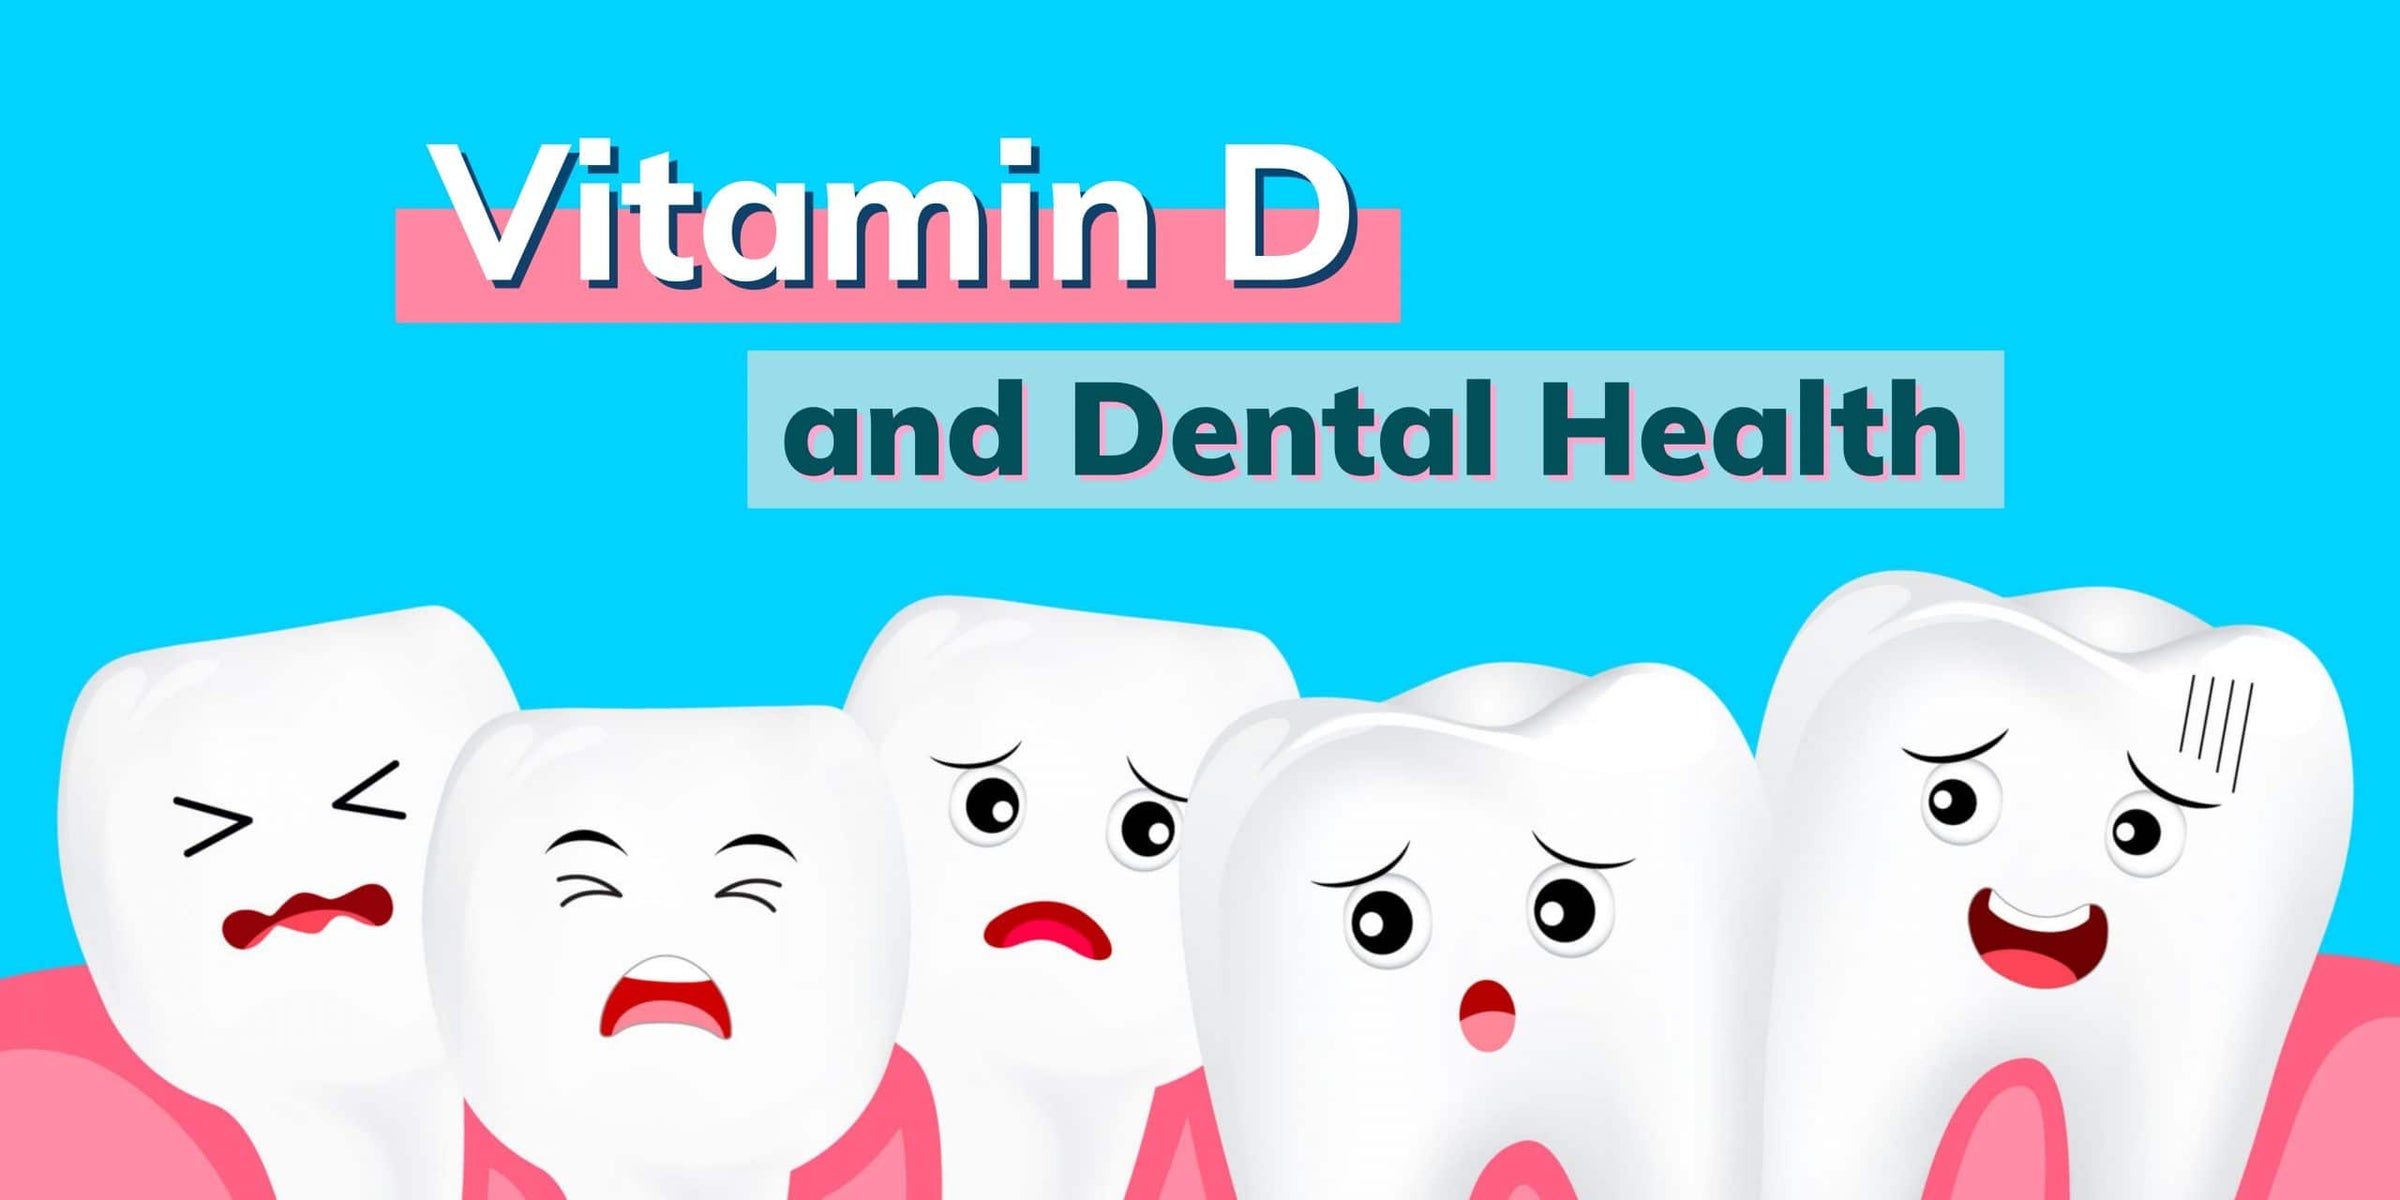 Vitamin D and Dental Health Image